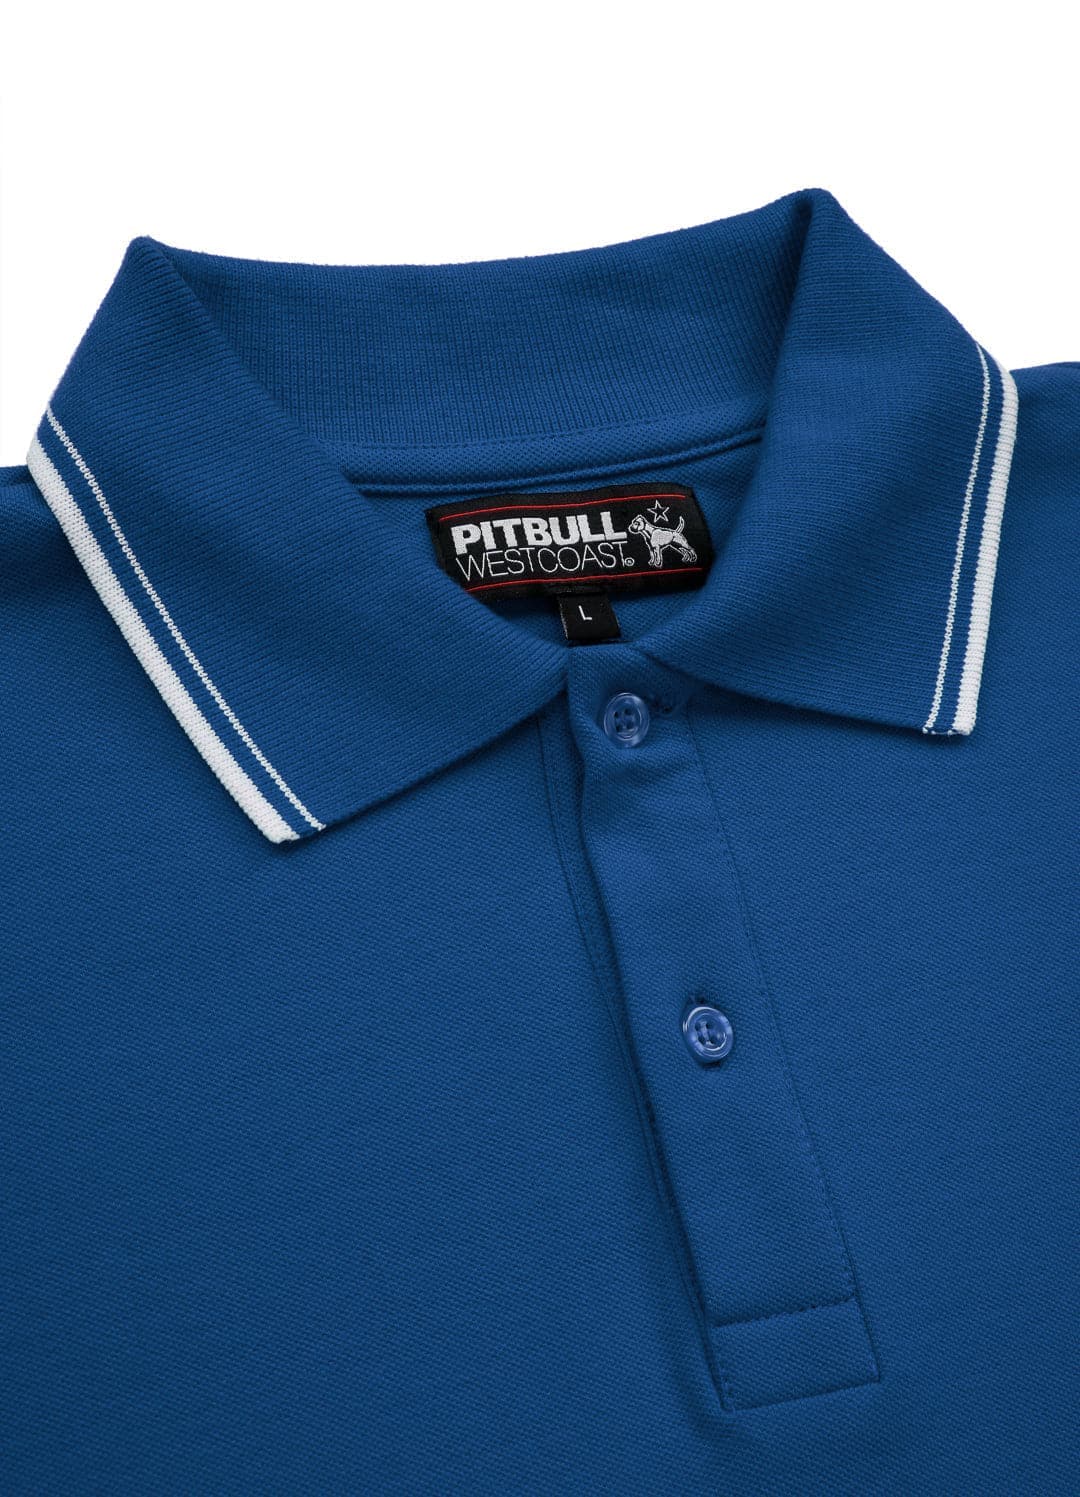 T-shirt POLO REGULAR STRIPES Spandex 250 GSM Blue - Pitbull West Coast International Store 